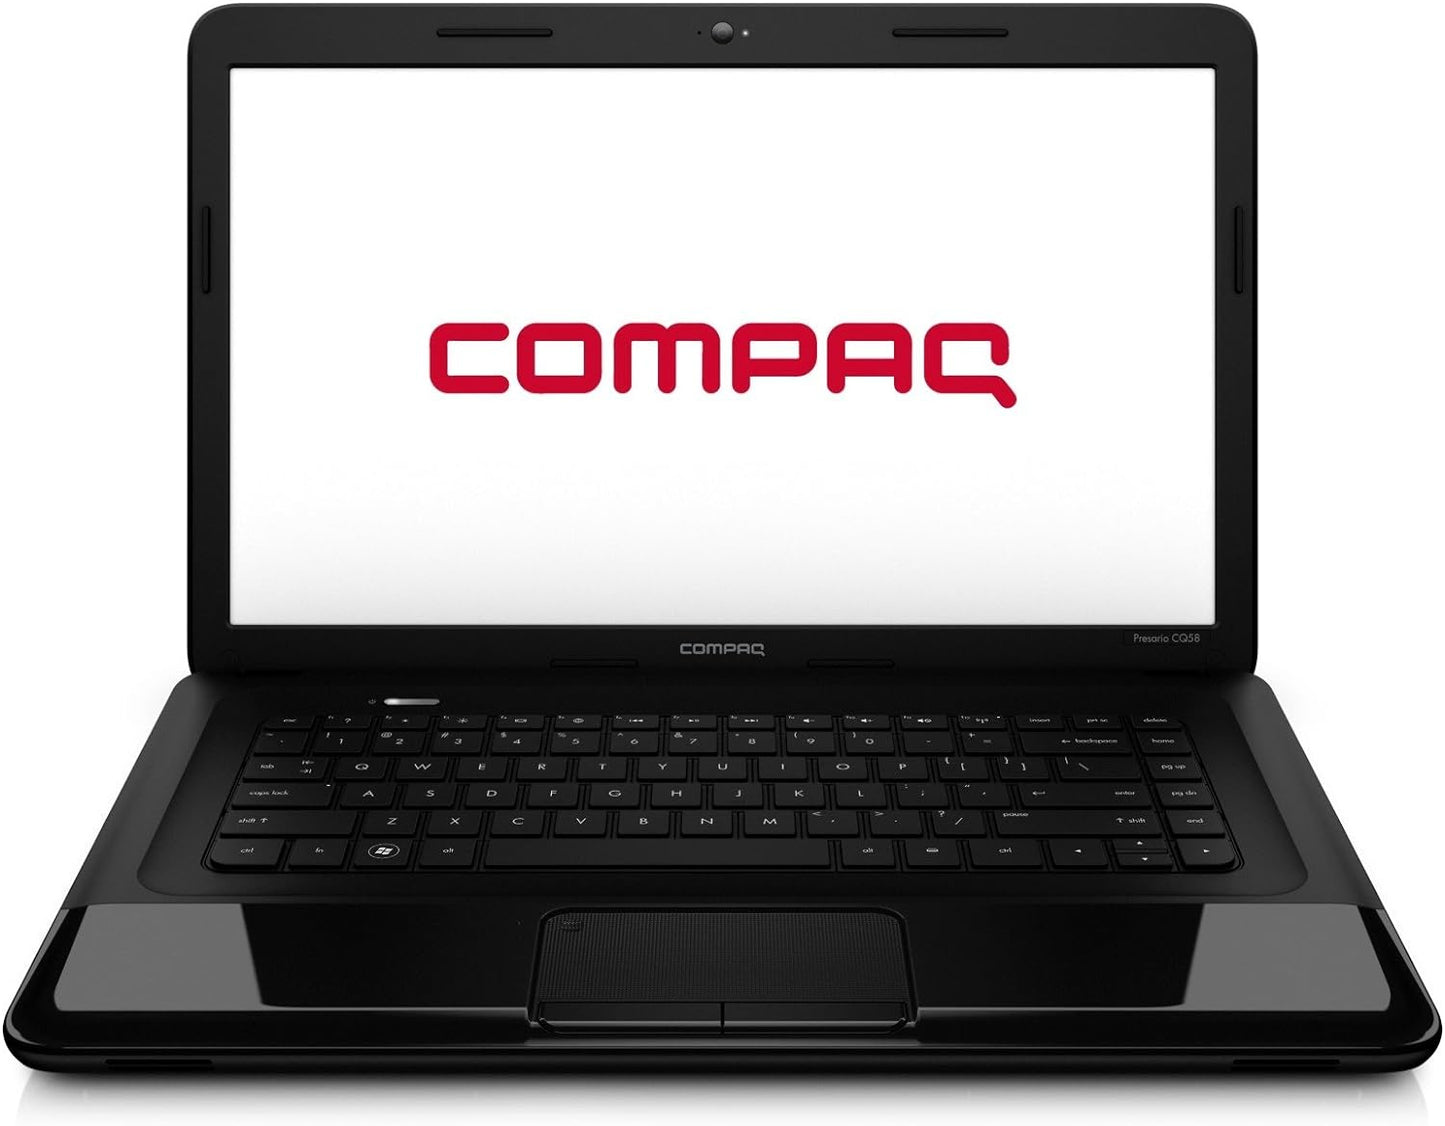 HP Compaq Presario CQ58 - AMD E-300 APU With Radeon - 4GB RAM, 320GB HDD 15.6"